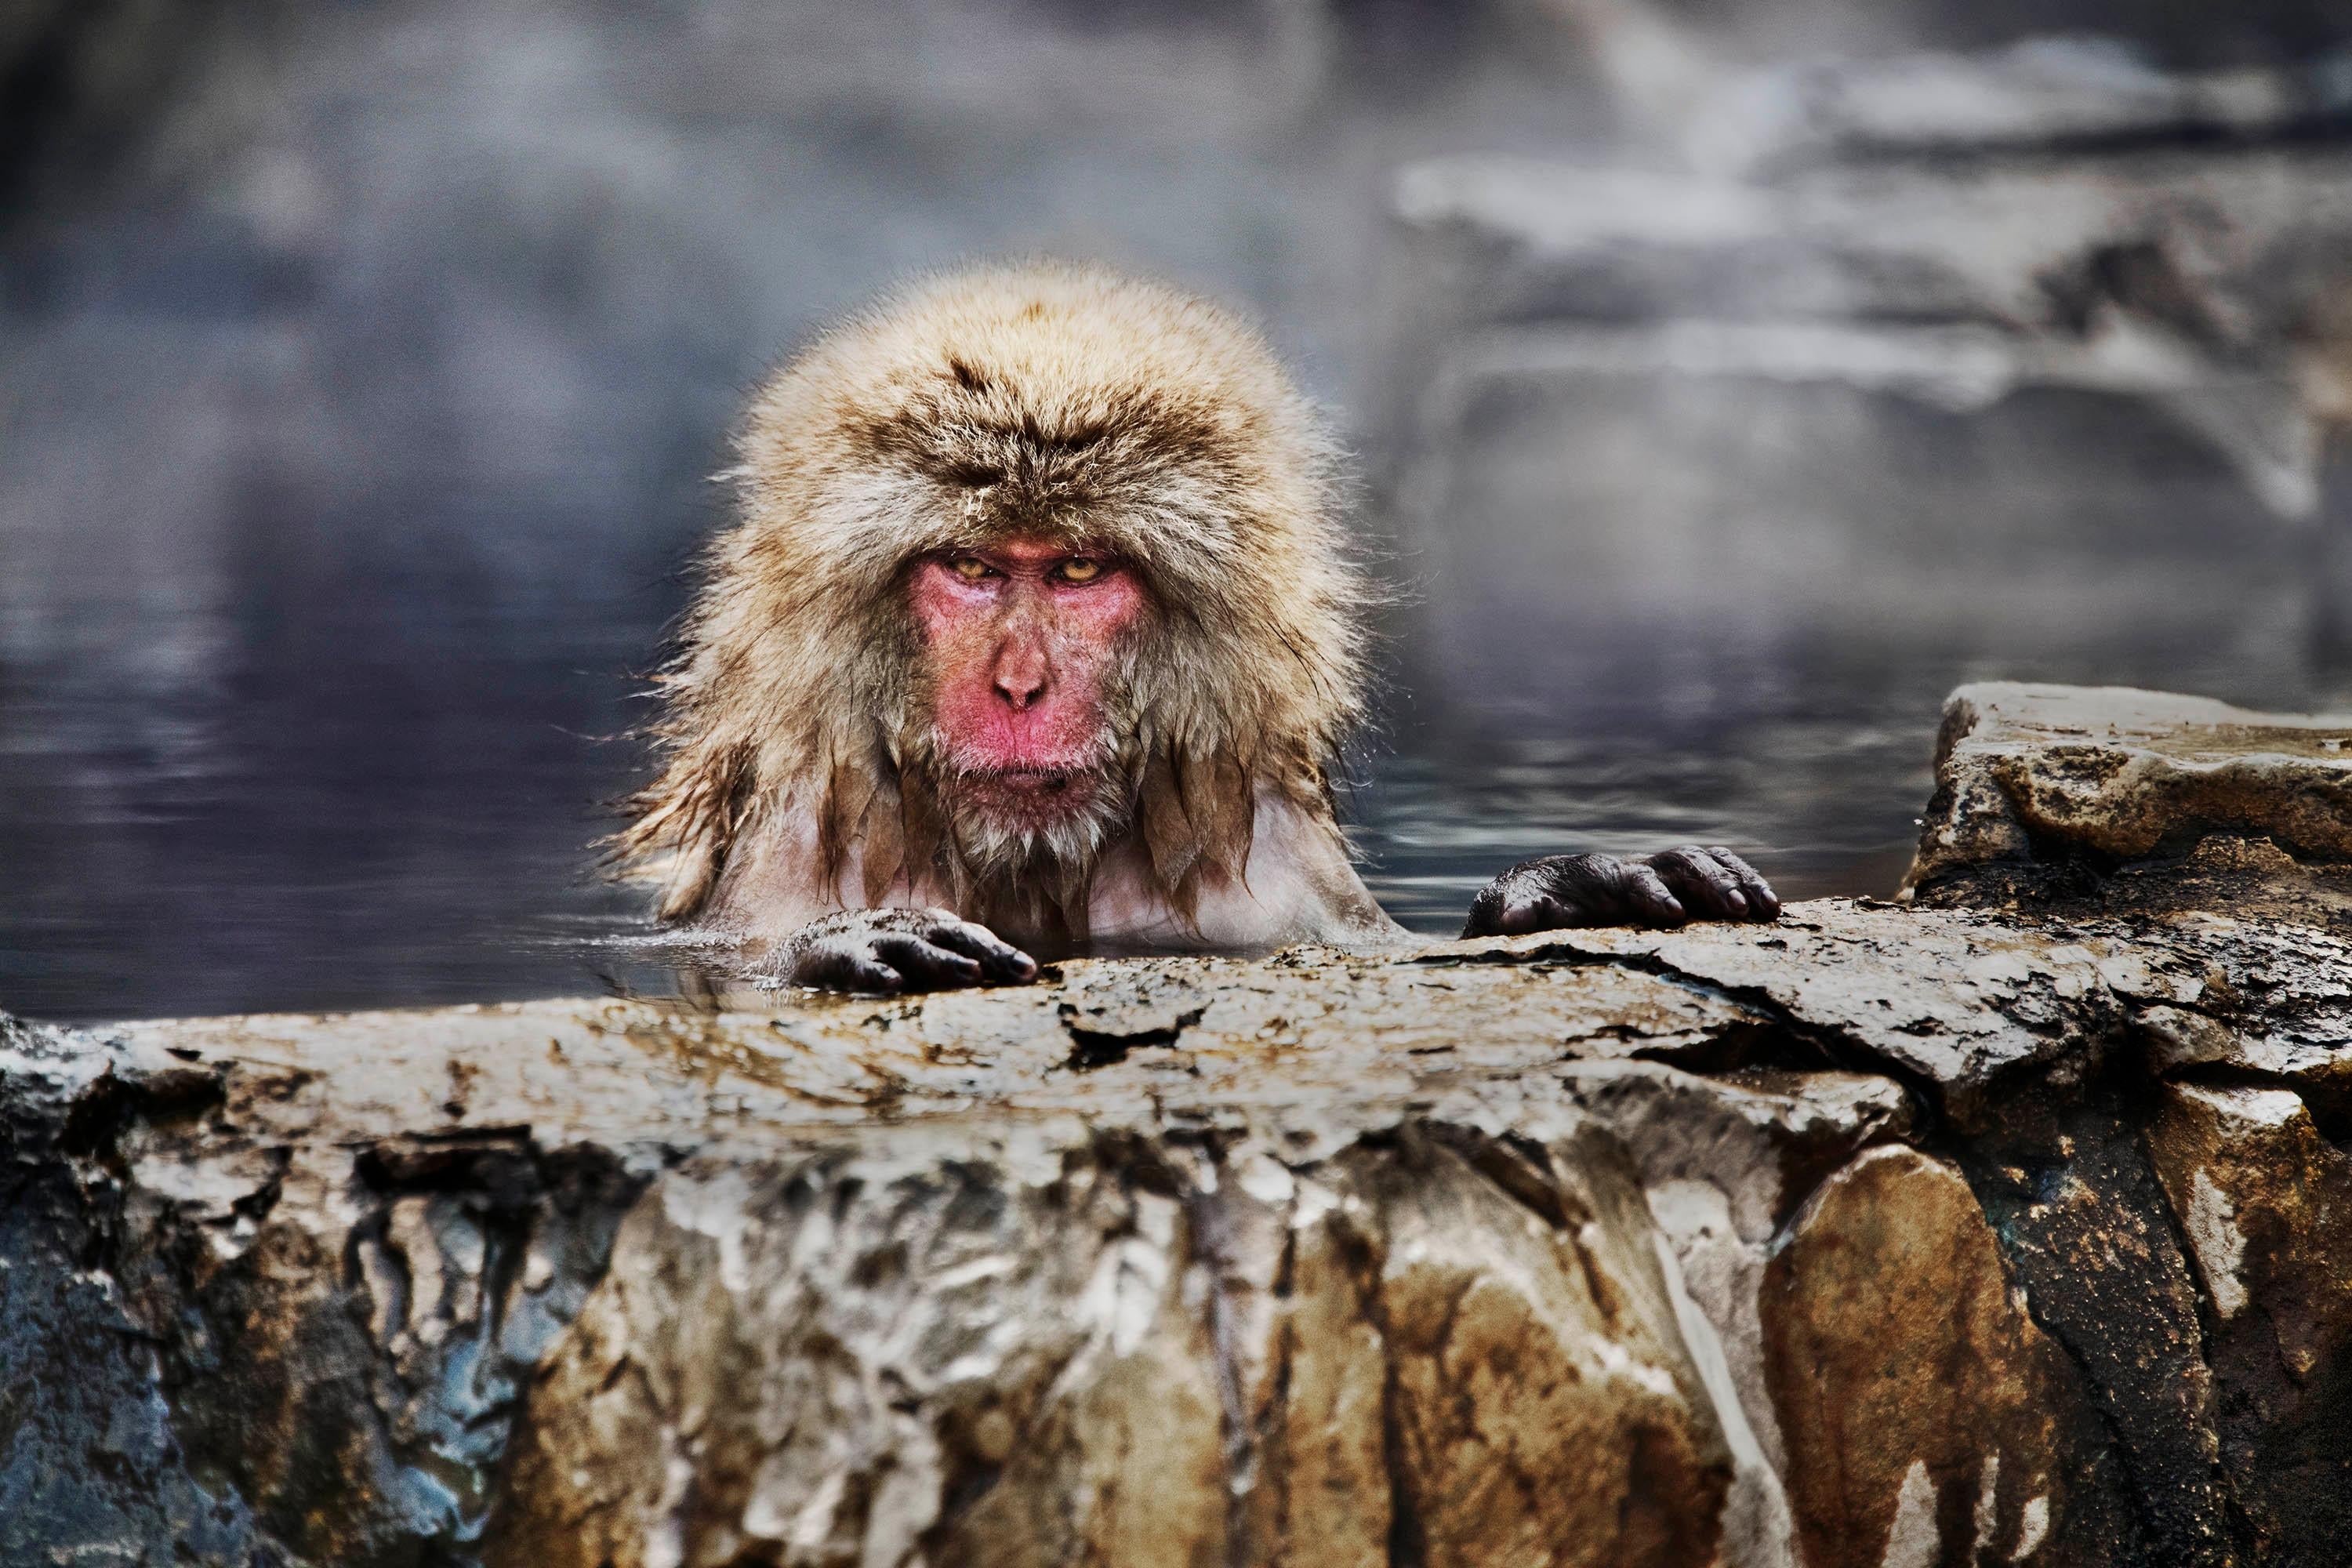 Steve McCurry Color Photograph - Snow Monkey in Jigokudani, Yaen-koen Park, Japan